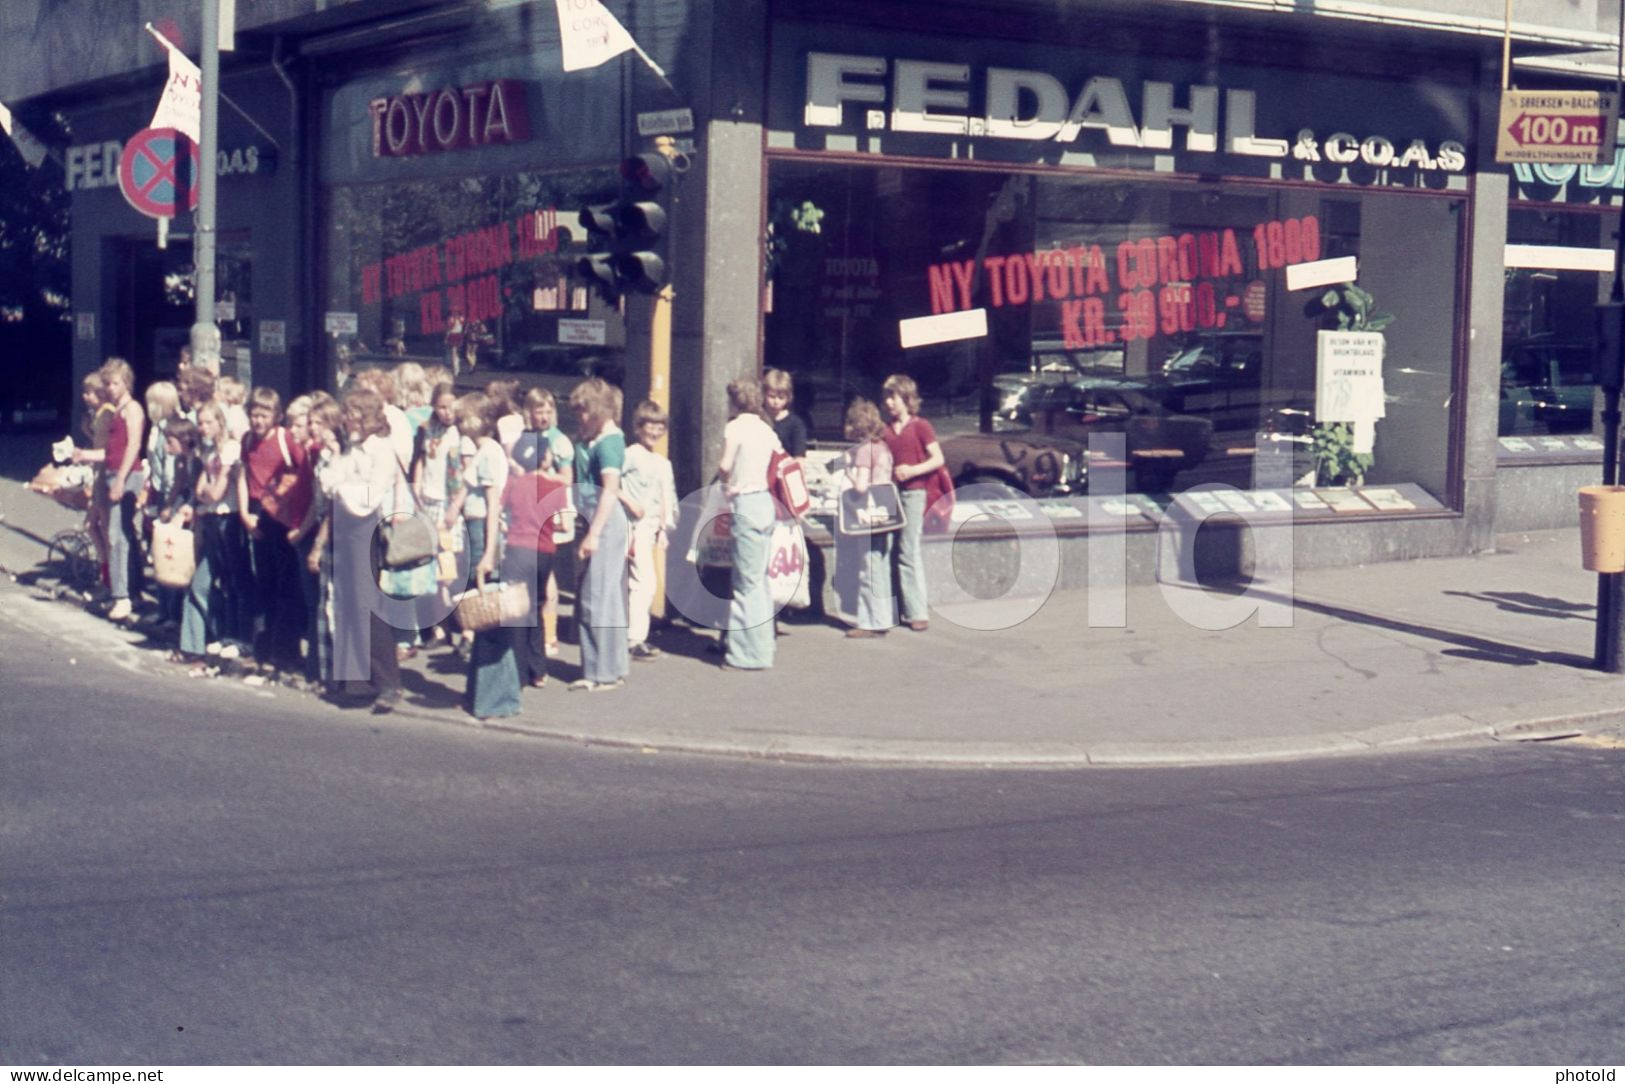 1977 F.E.DAHL TOYOTA CORONA 1600 CAR STAND OSLO NORGE AMATEUR 35mm DIAPOSITIVE SLIDE Not PHOTO No FOTO NB4109 - Dias